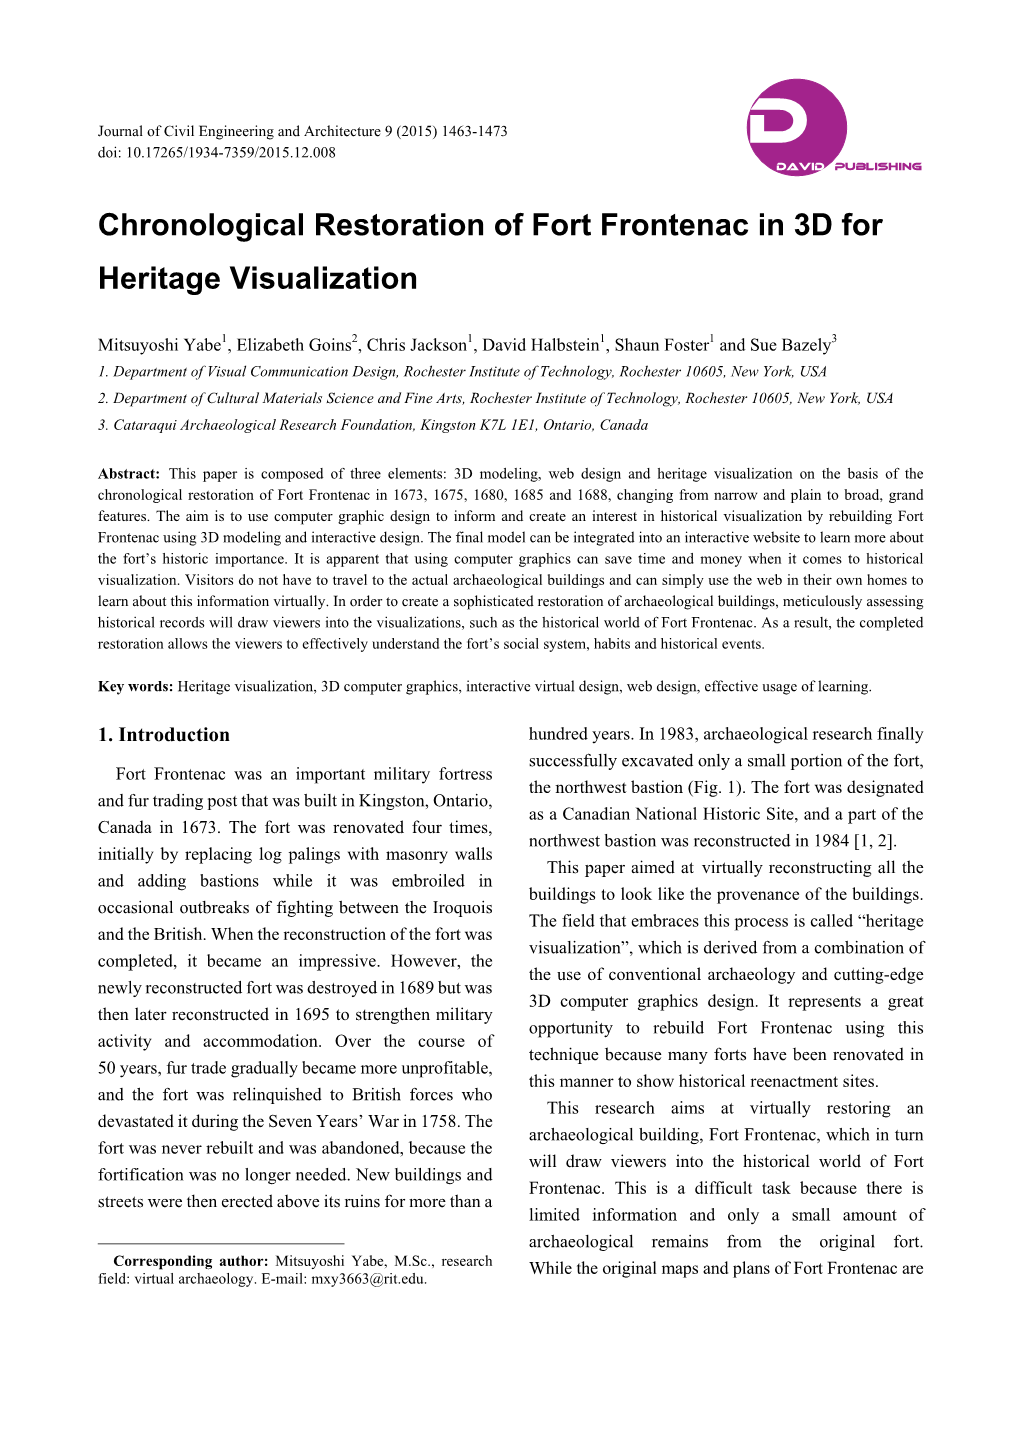 Chronological Restoration of Fort Frontenac in 3D for Heritage Visualization